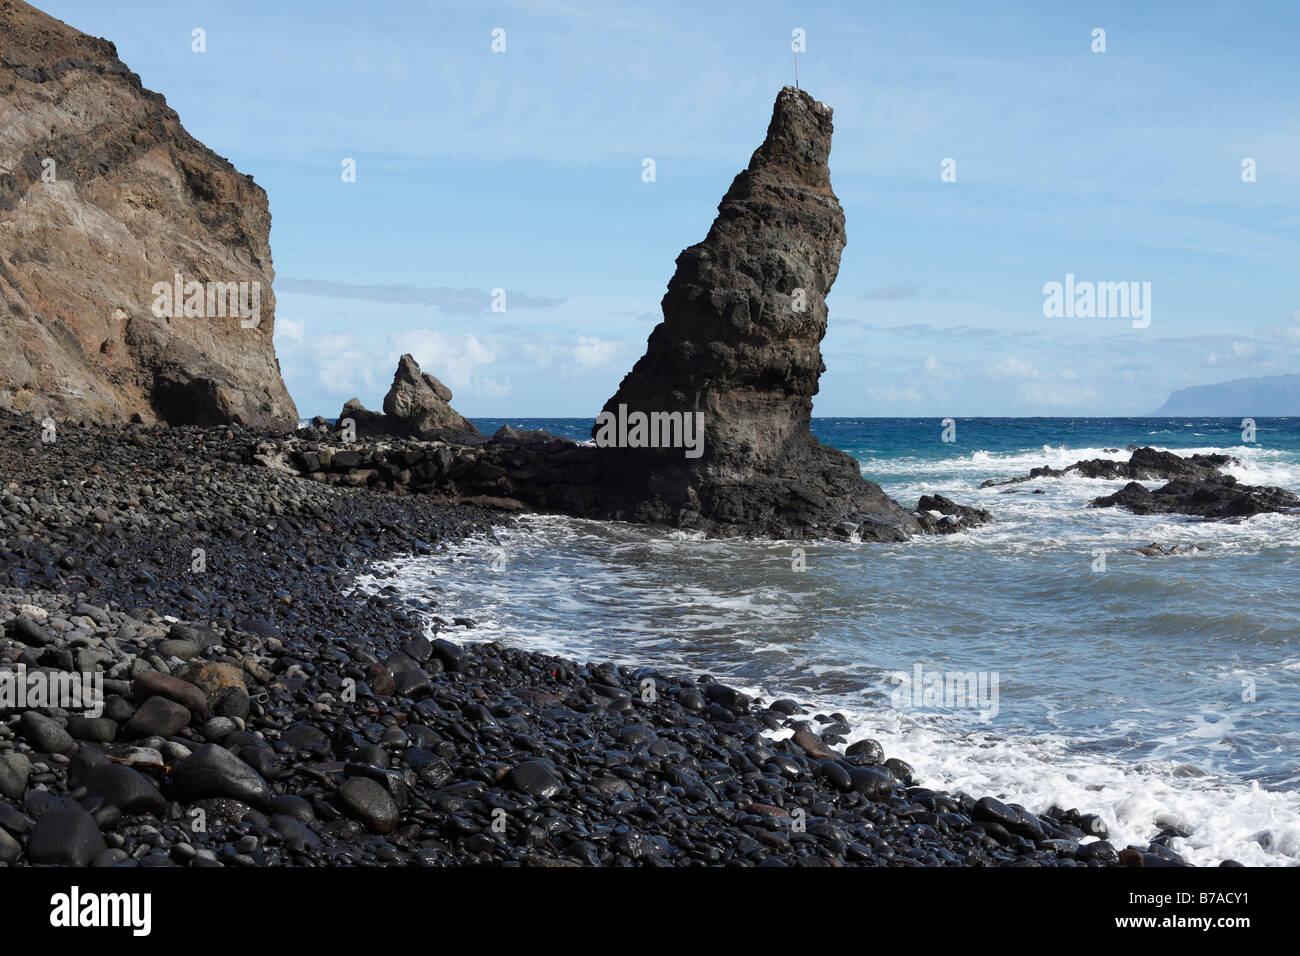 Rock tower made of lava stone, Playa de Caleta, Hermigua, La Gomera, Canary islands, Spain, Europe Stock Photo